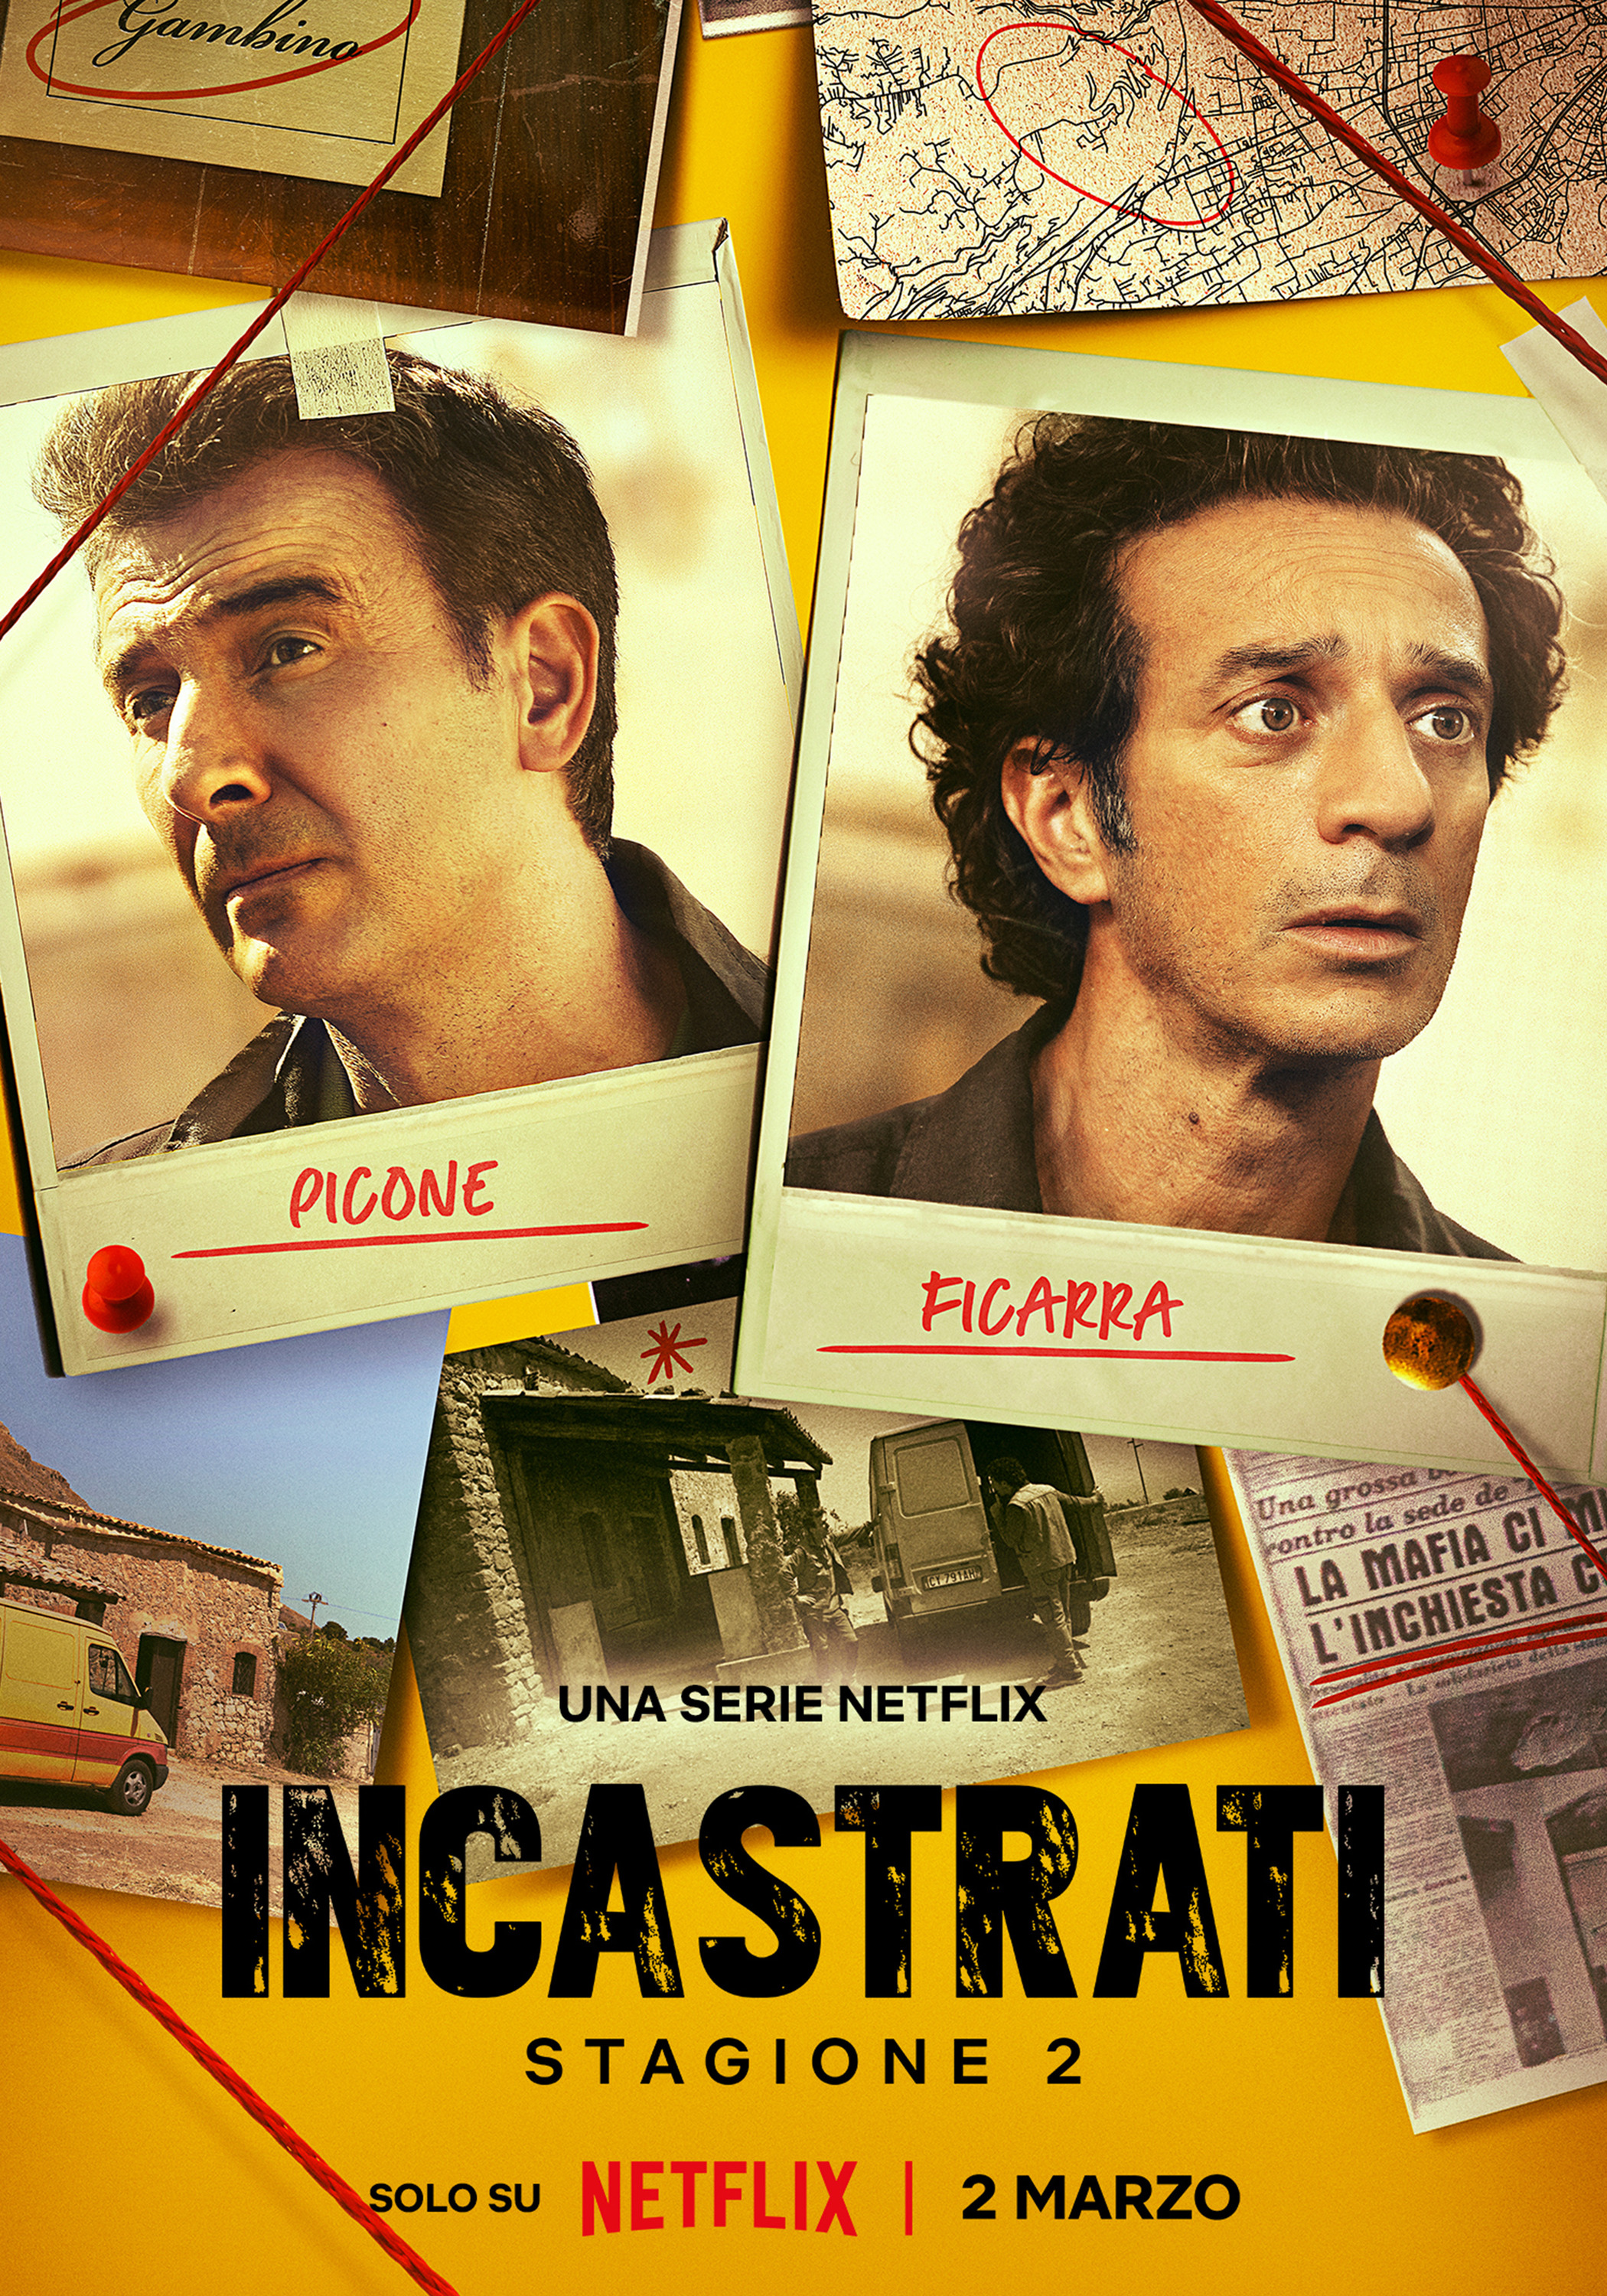 Mega Sized TV Poster Image for Incastrati (#4 of 4)